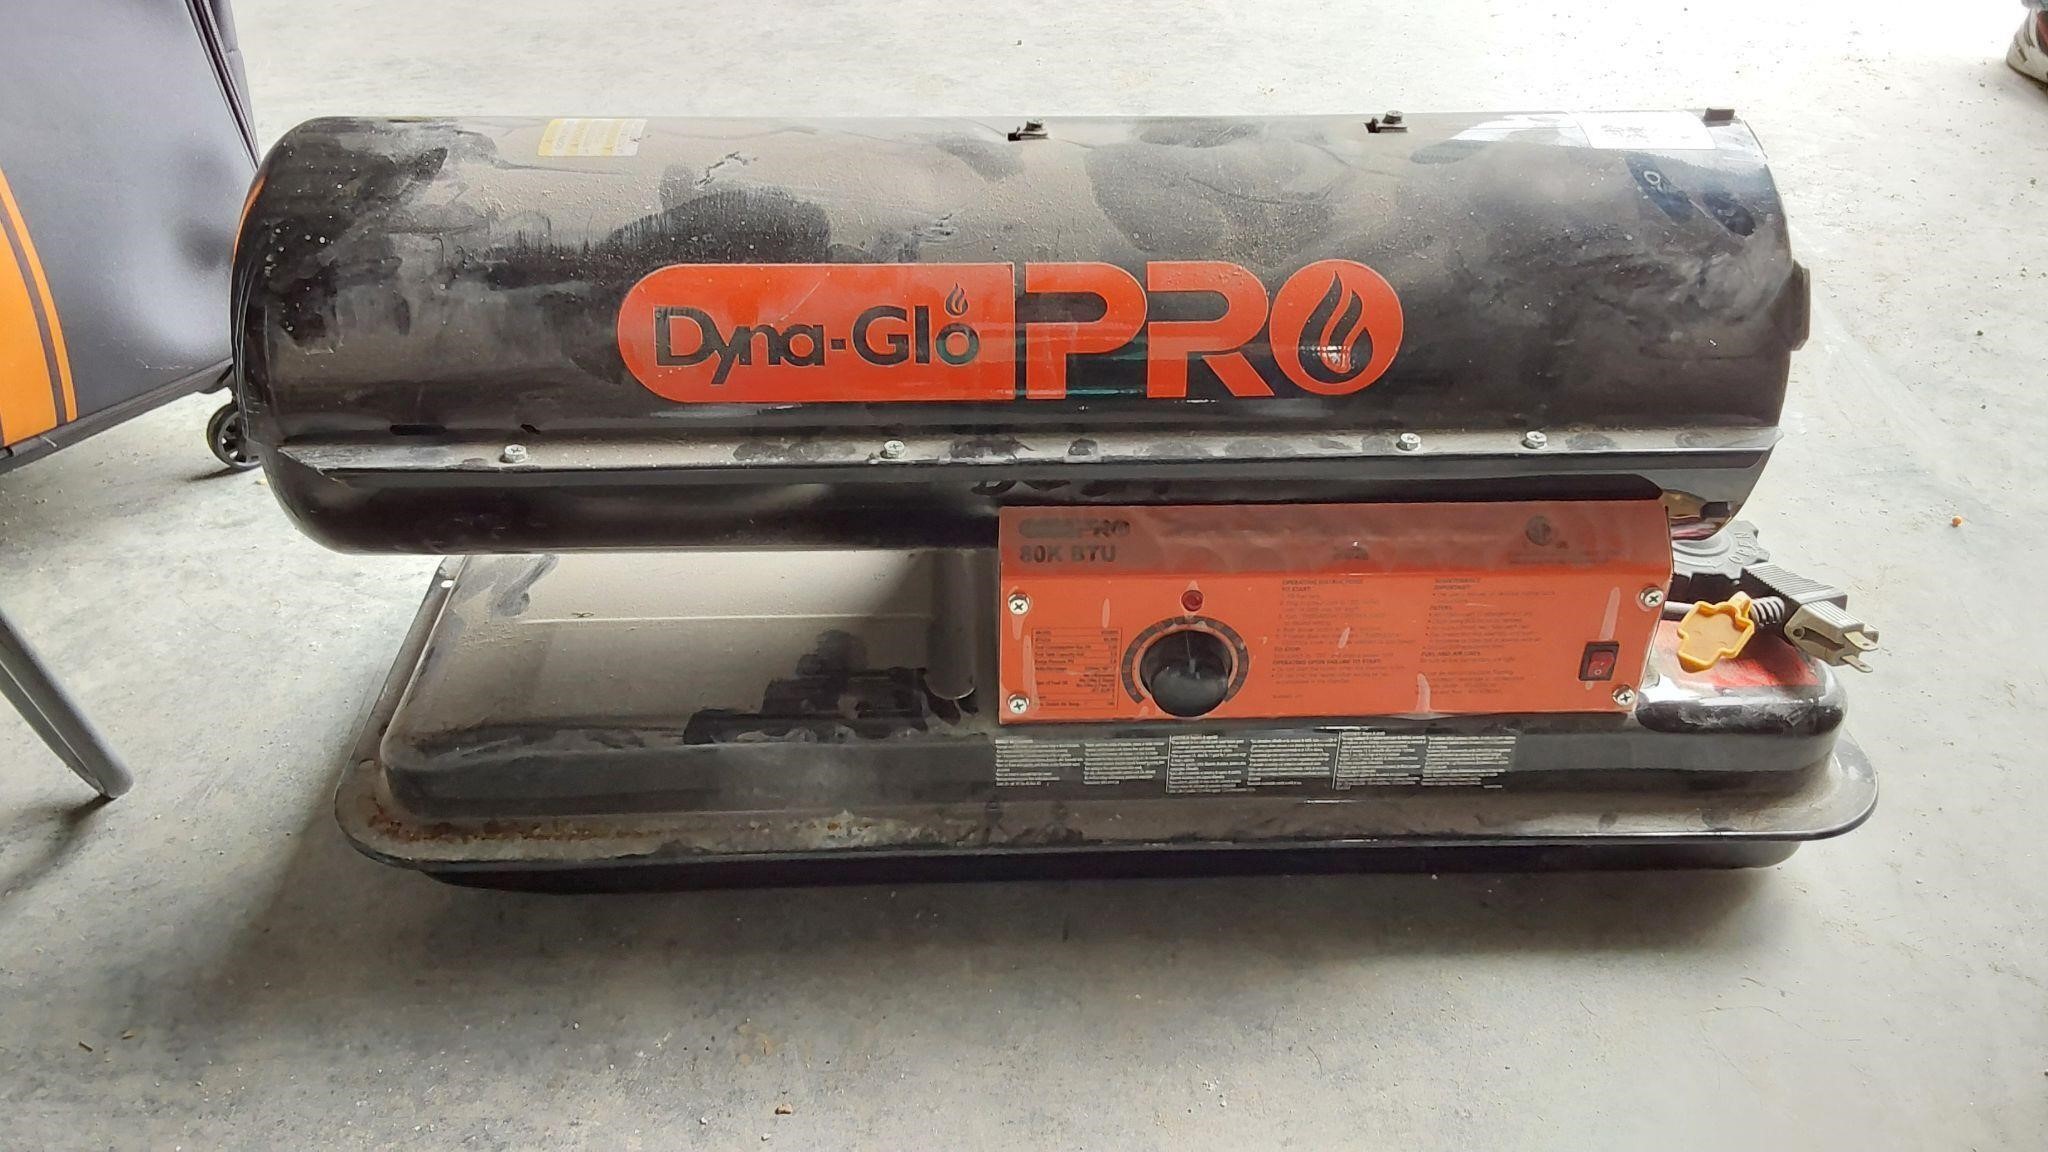 Dyna-glo Pro propane heater 80k btu